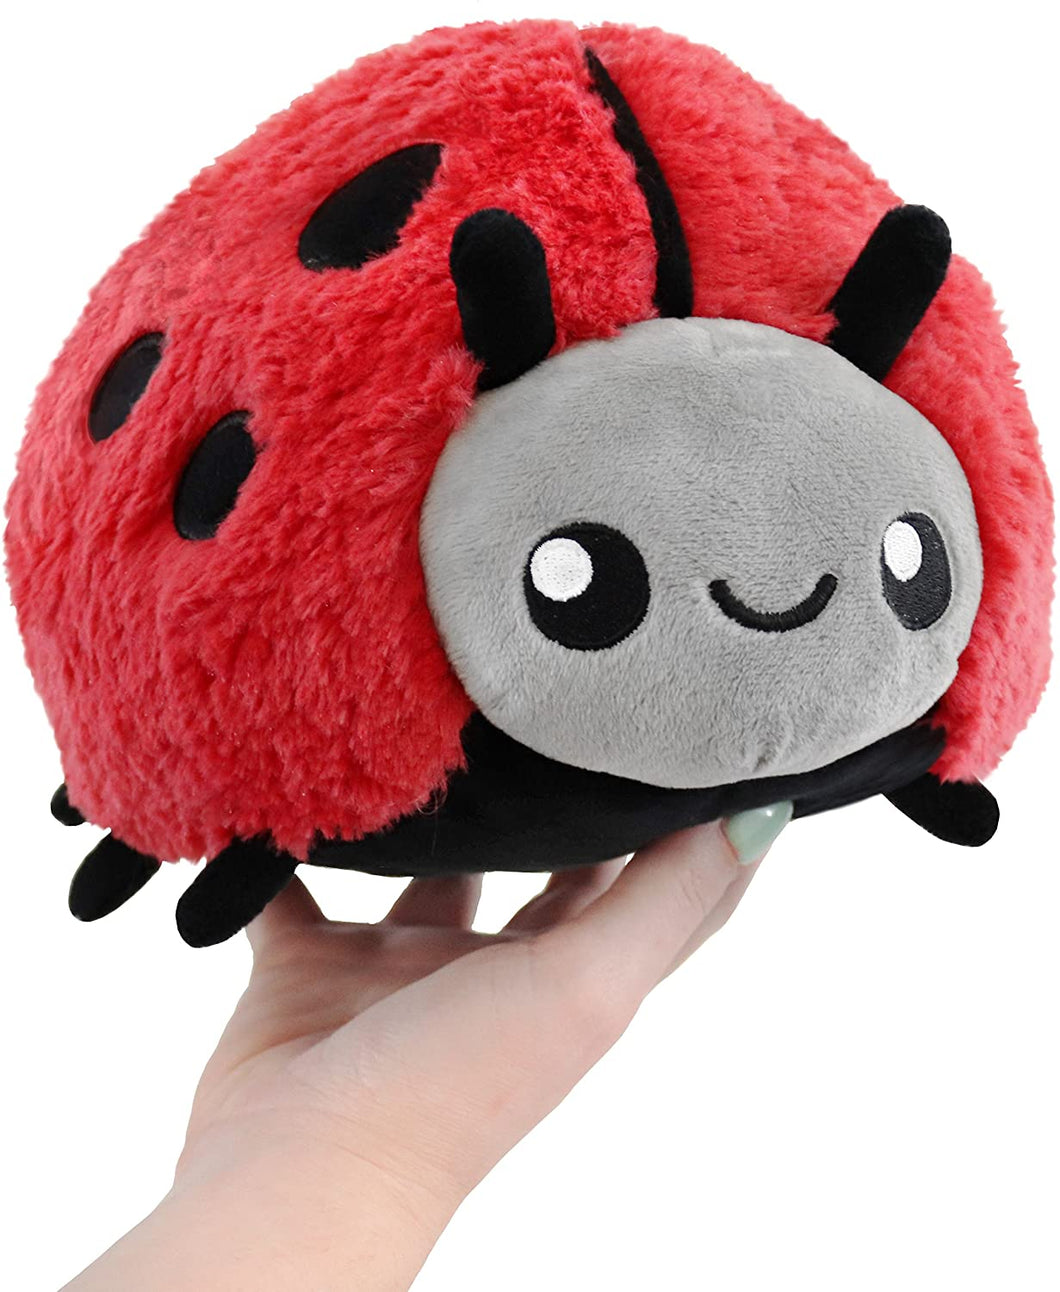 Squishable Mini Ladybug Plush, Small